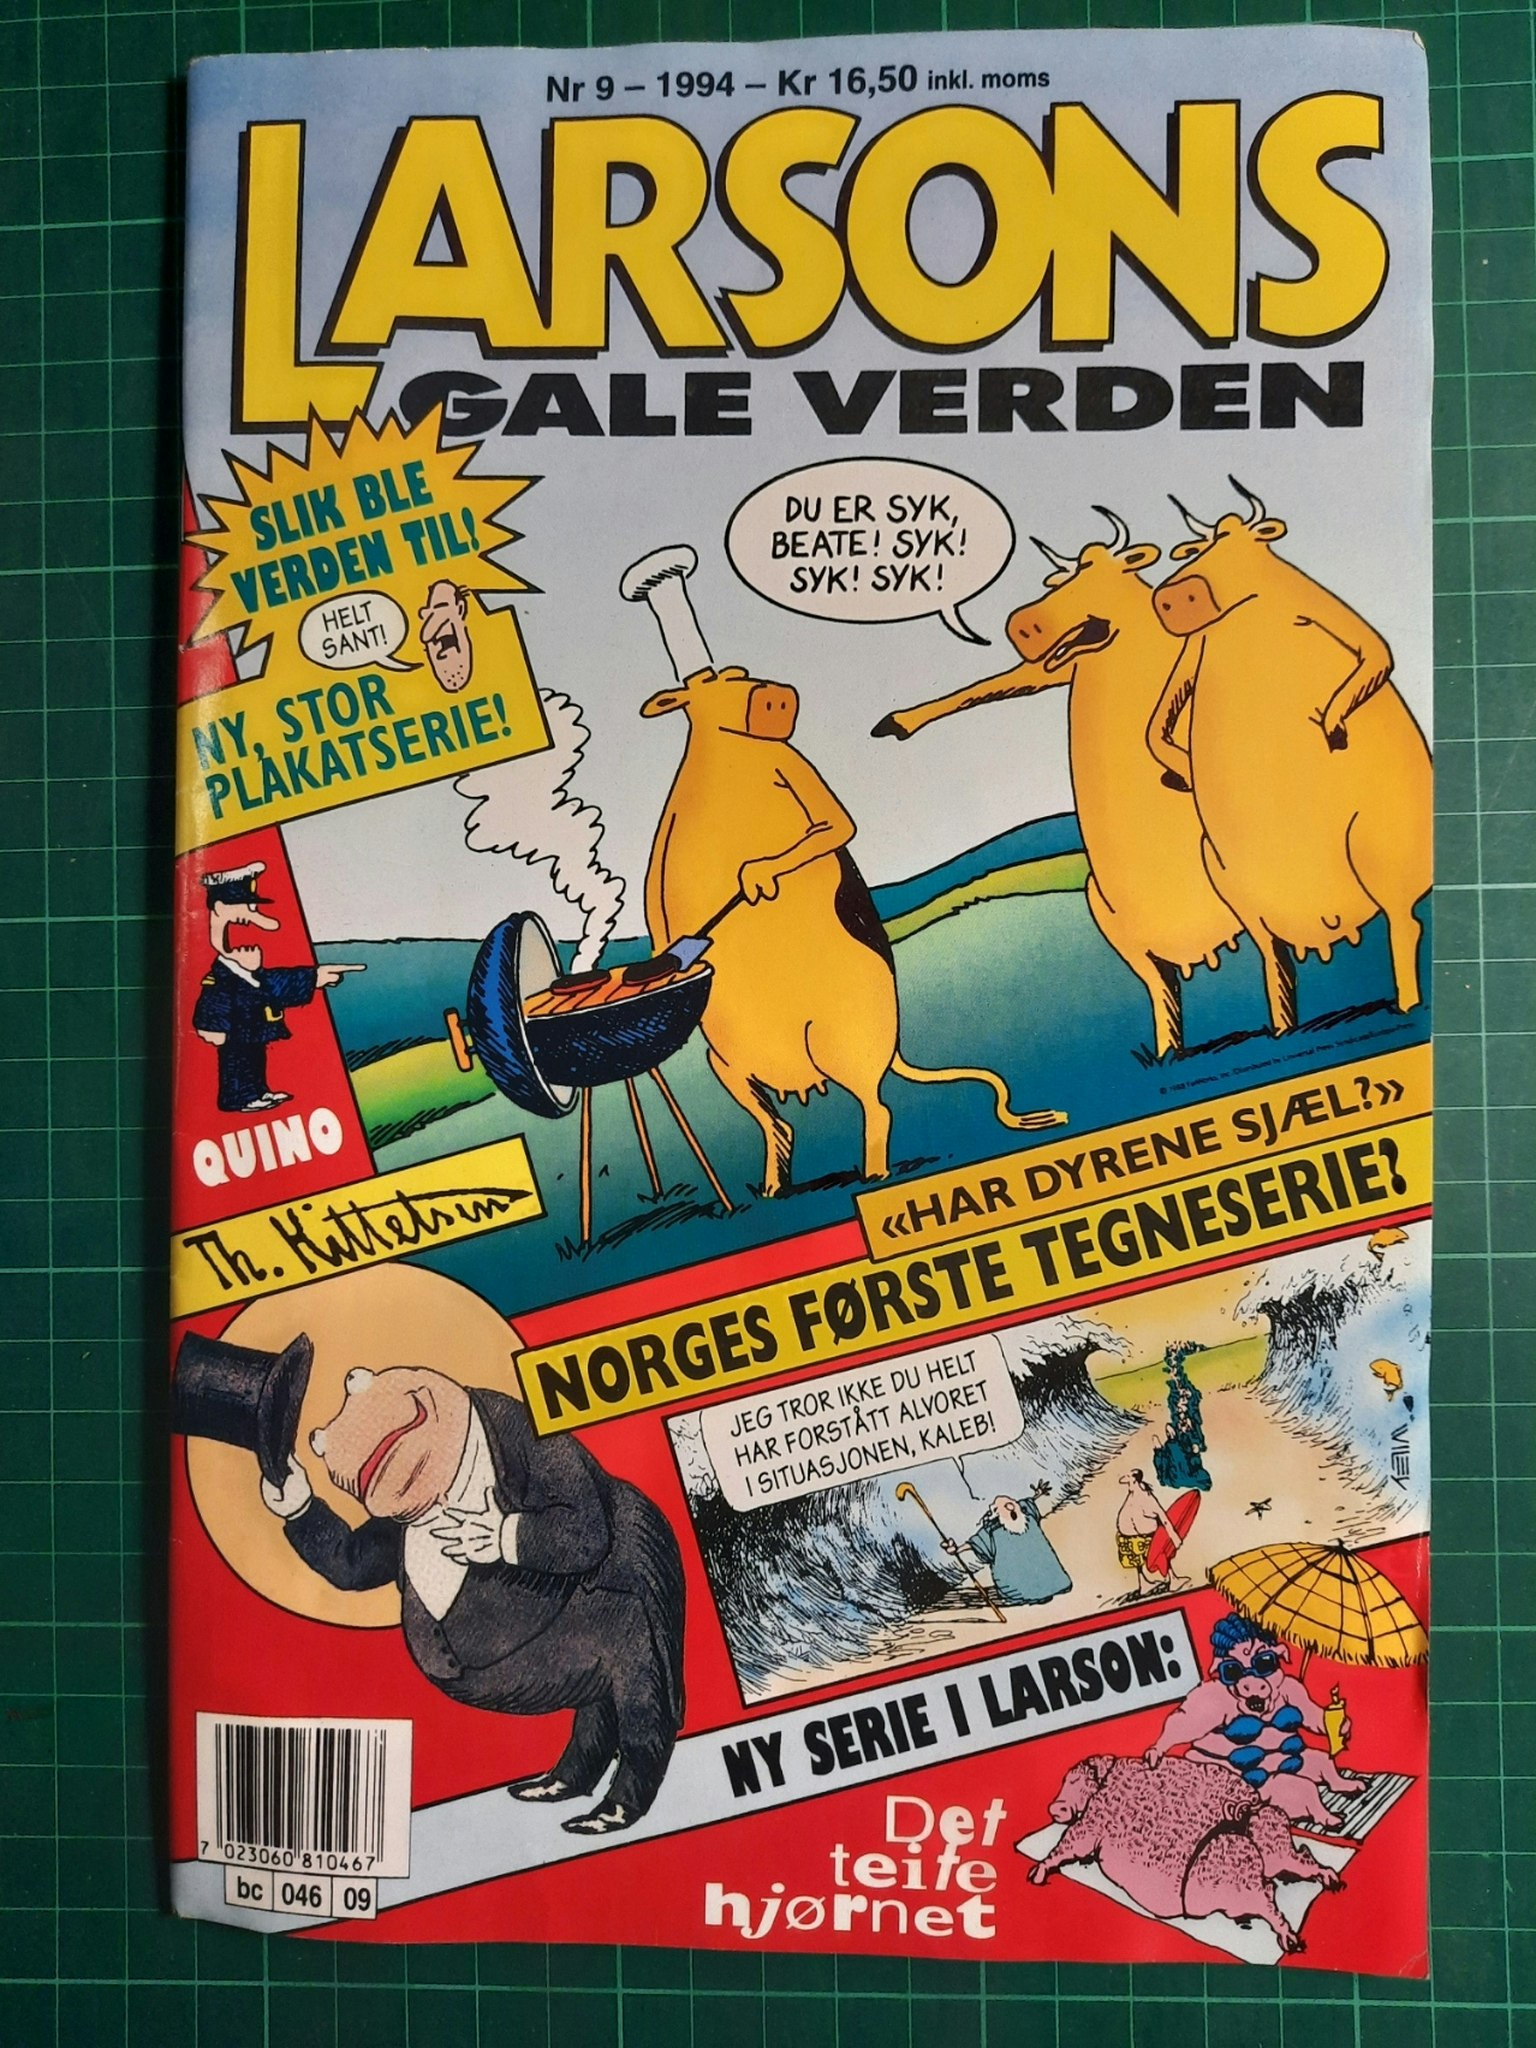 Larsons gale verden 1994 - 09 m/poster